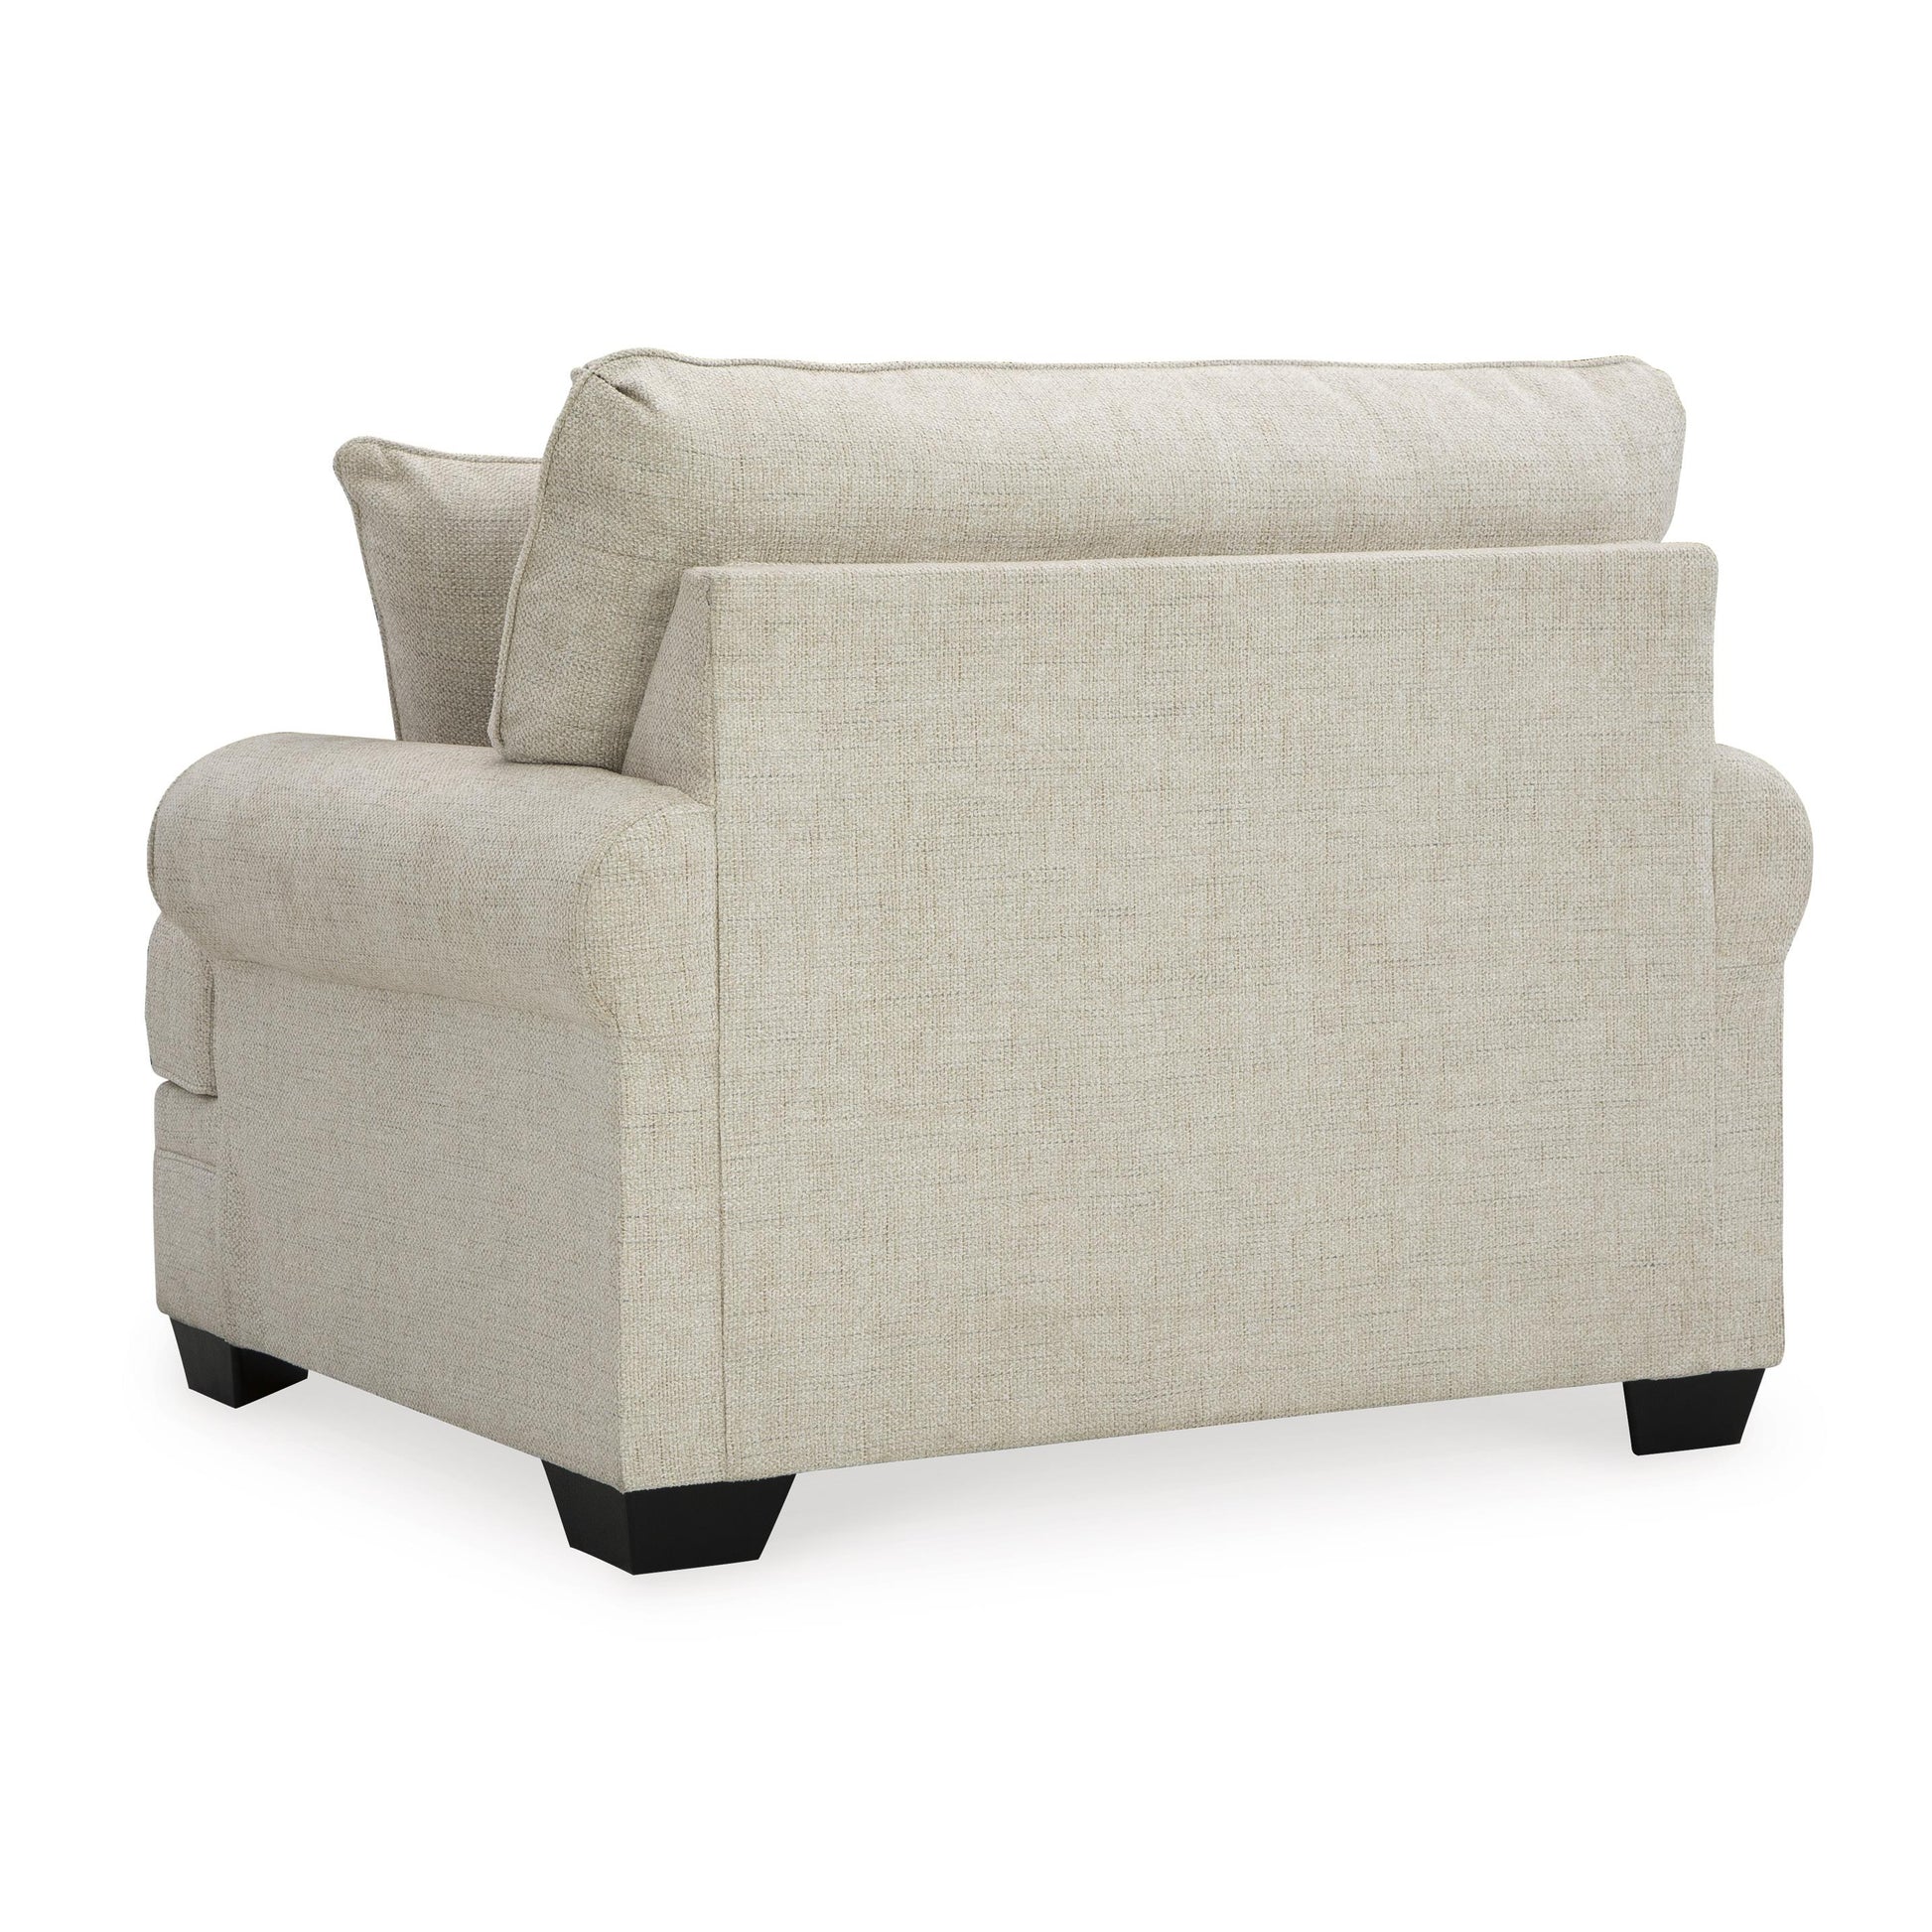 Benchcraft Rilynn Stationary Fabric Chair 3480923